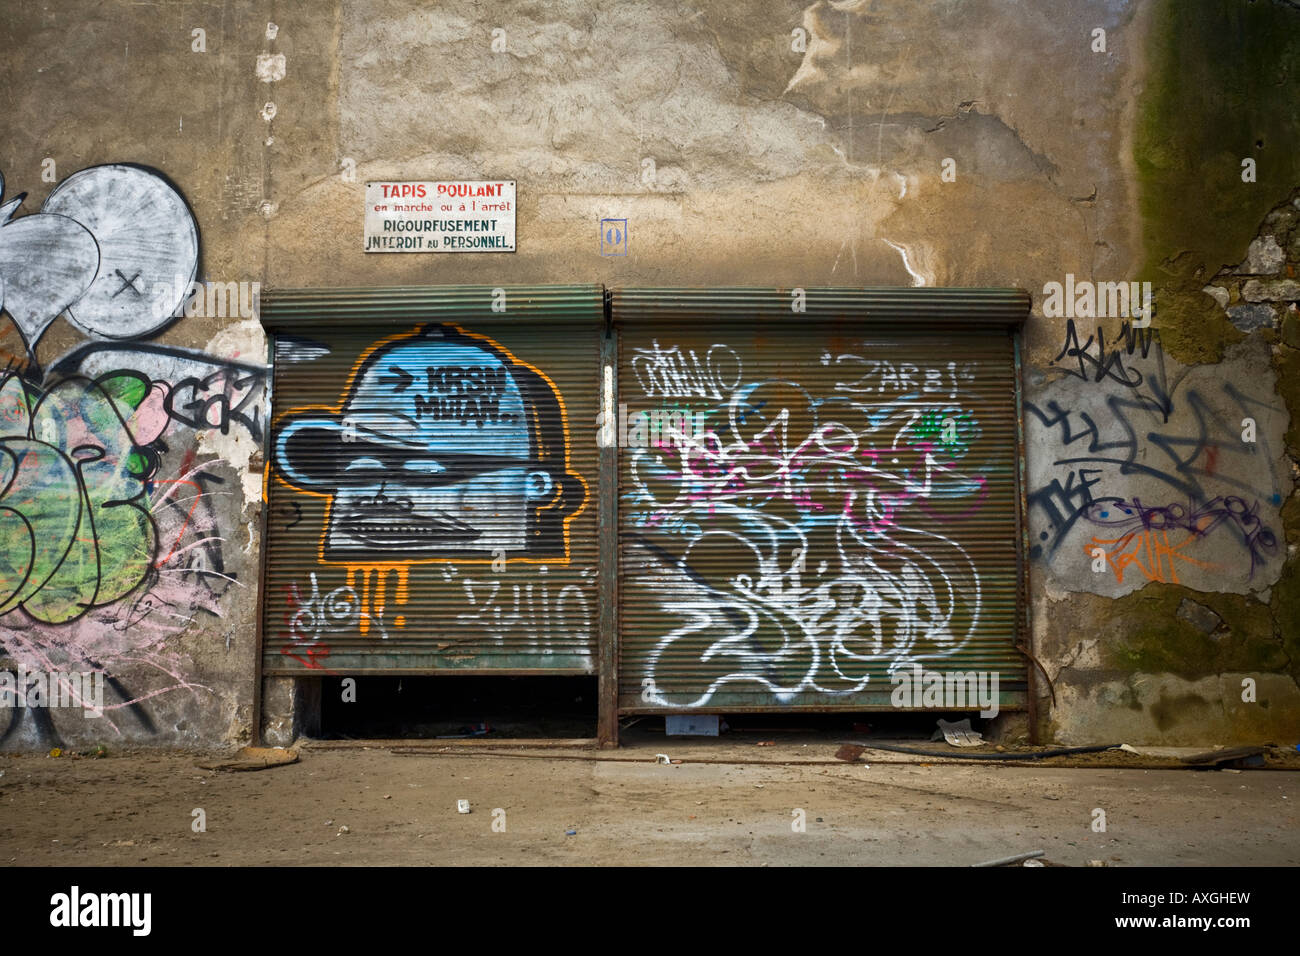 Graffiti in einer Brownfield-Website-Fabrik in Vichy (Frankreich). Graffiti Dans Une Usine Désaffectée de Vichy (Allier - Frankreich). Stockfoto